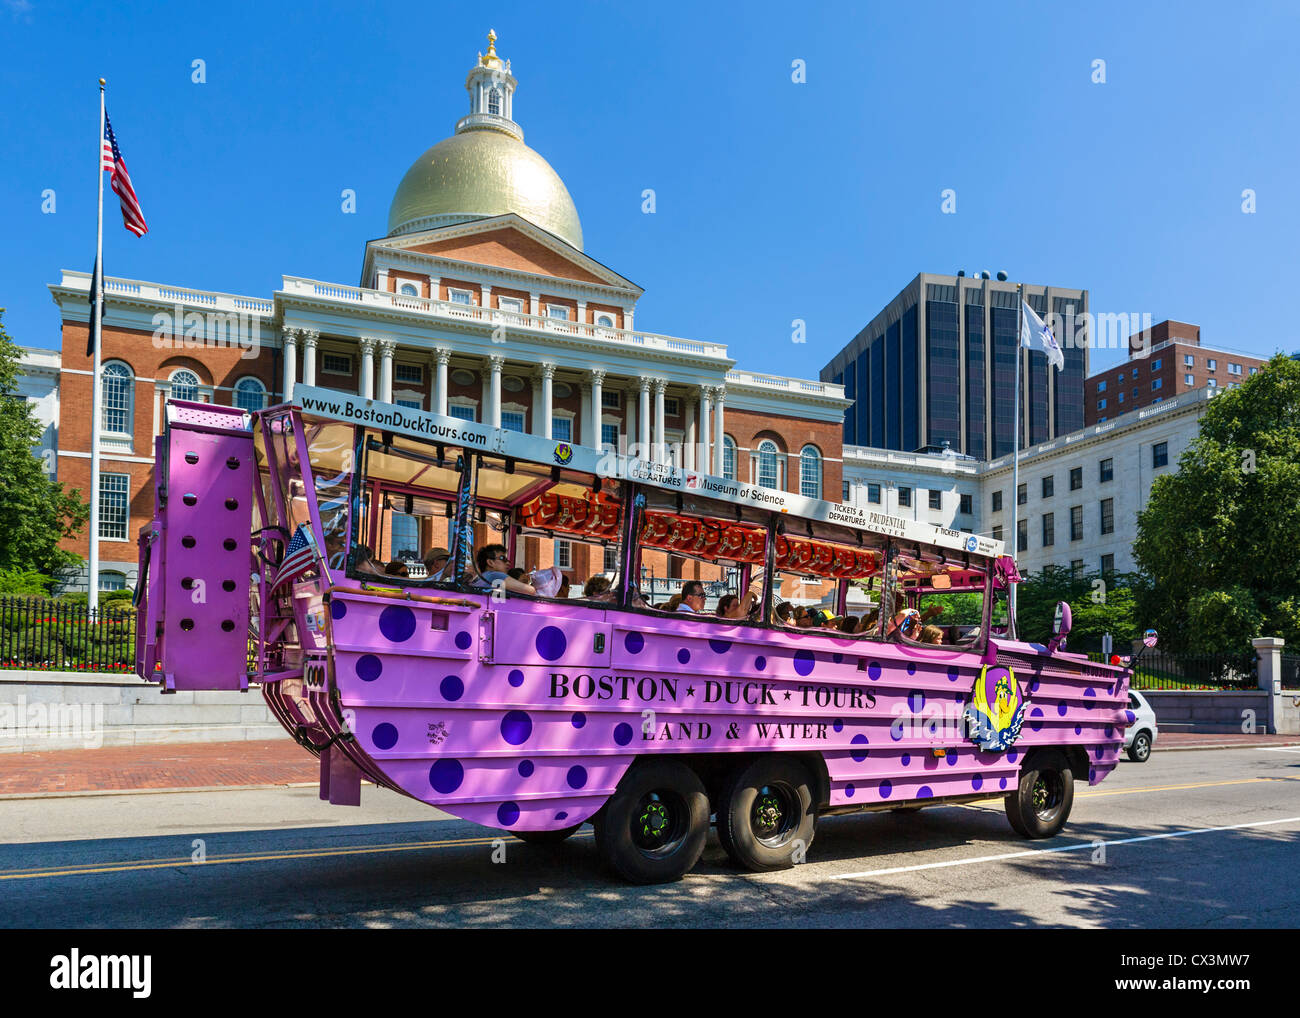 Boston Duck Tours amphibious tour bus in front of the Massachusetts State House, Beacon Street, Boston, Massachusetts, USA Stock Photo